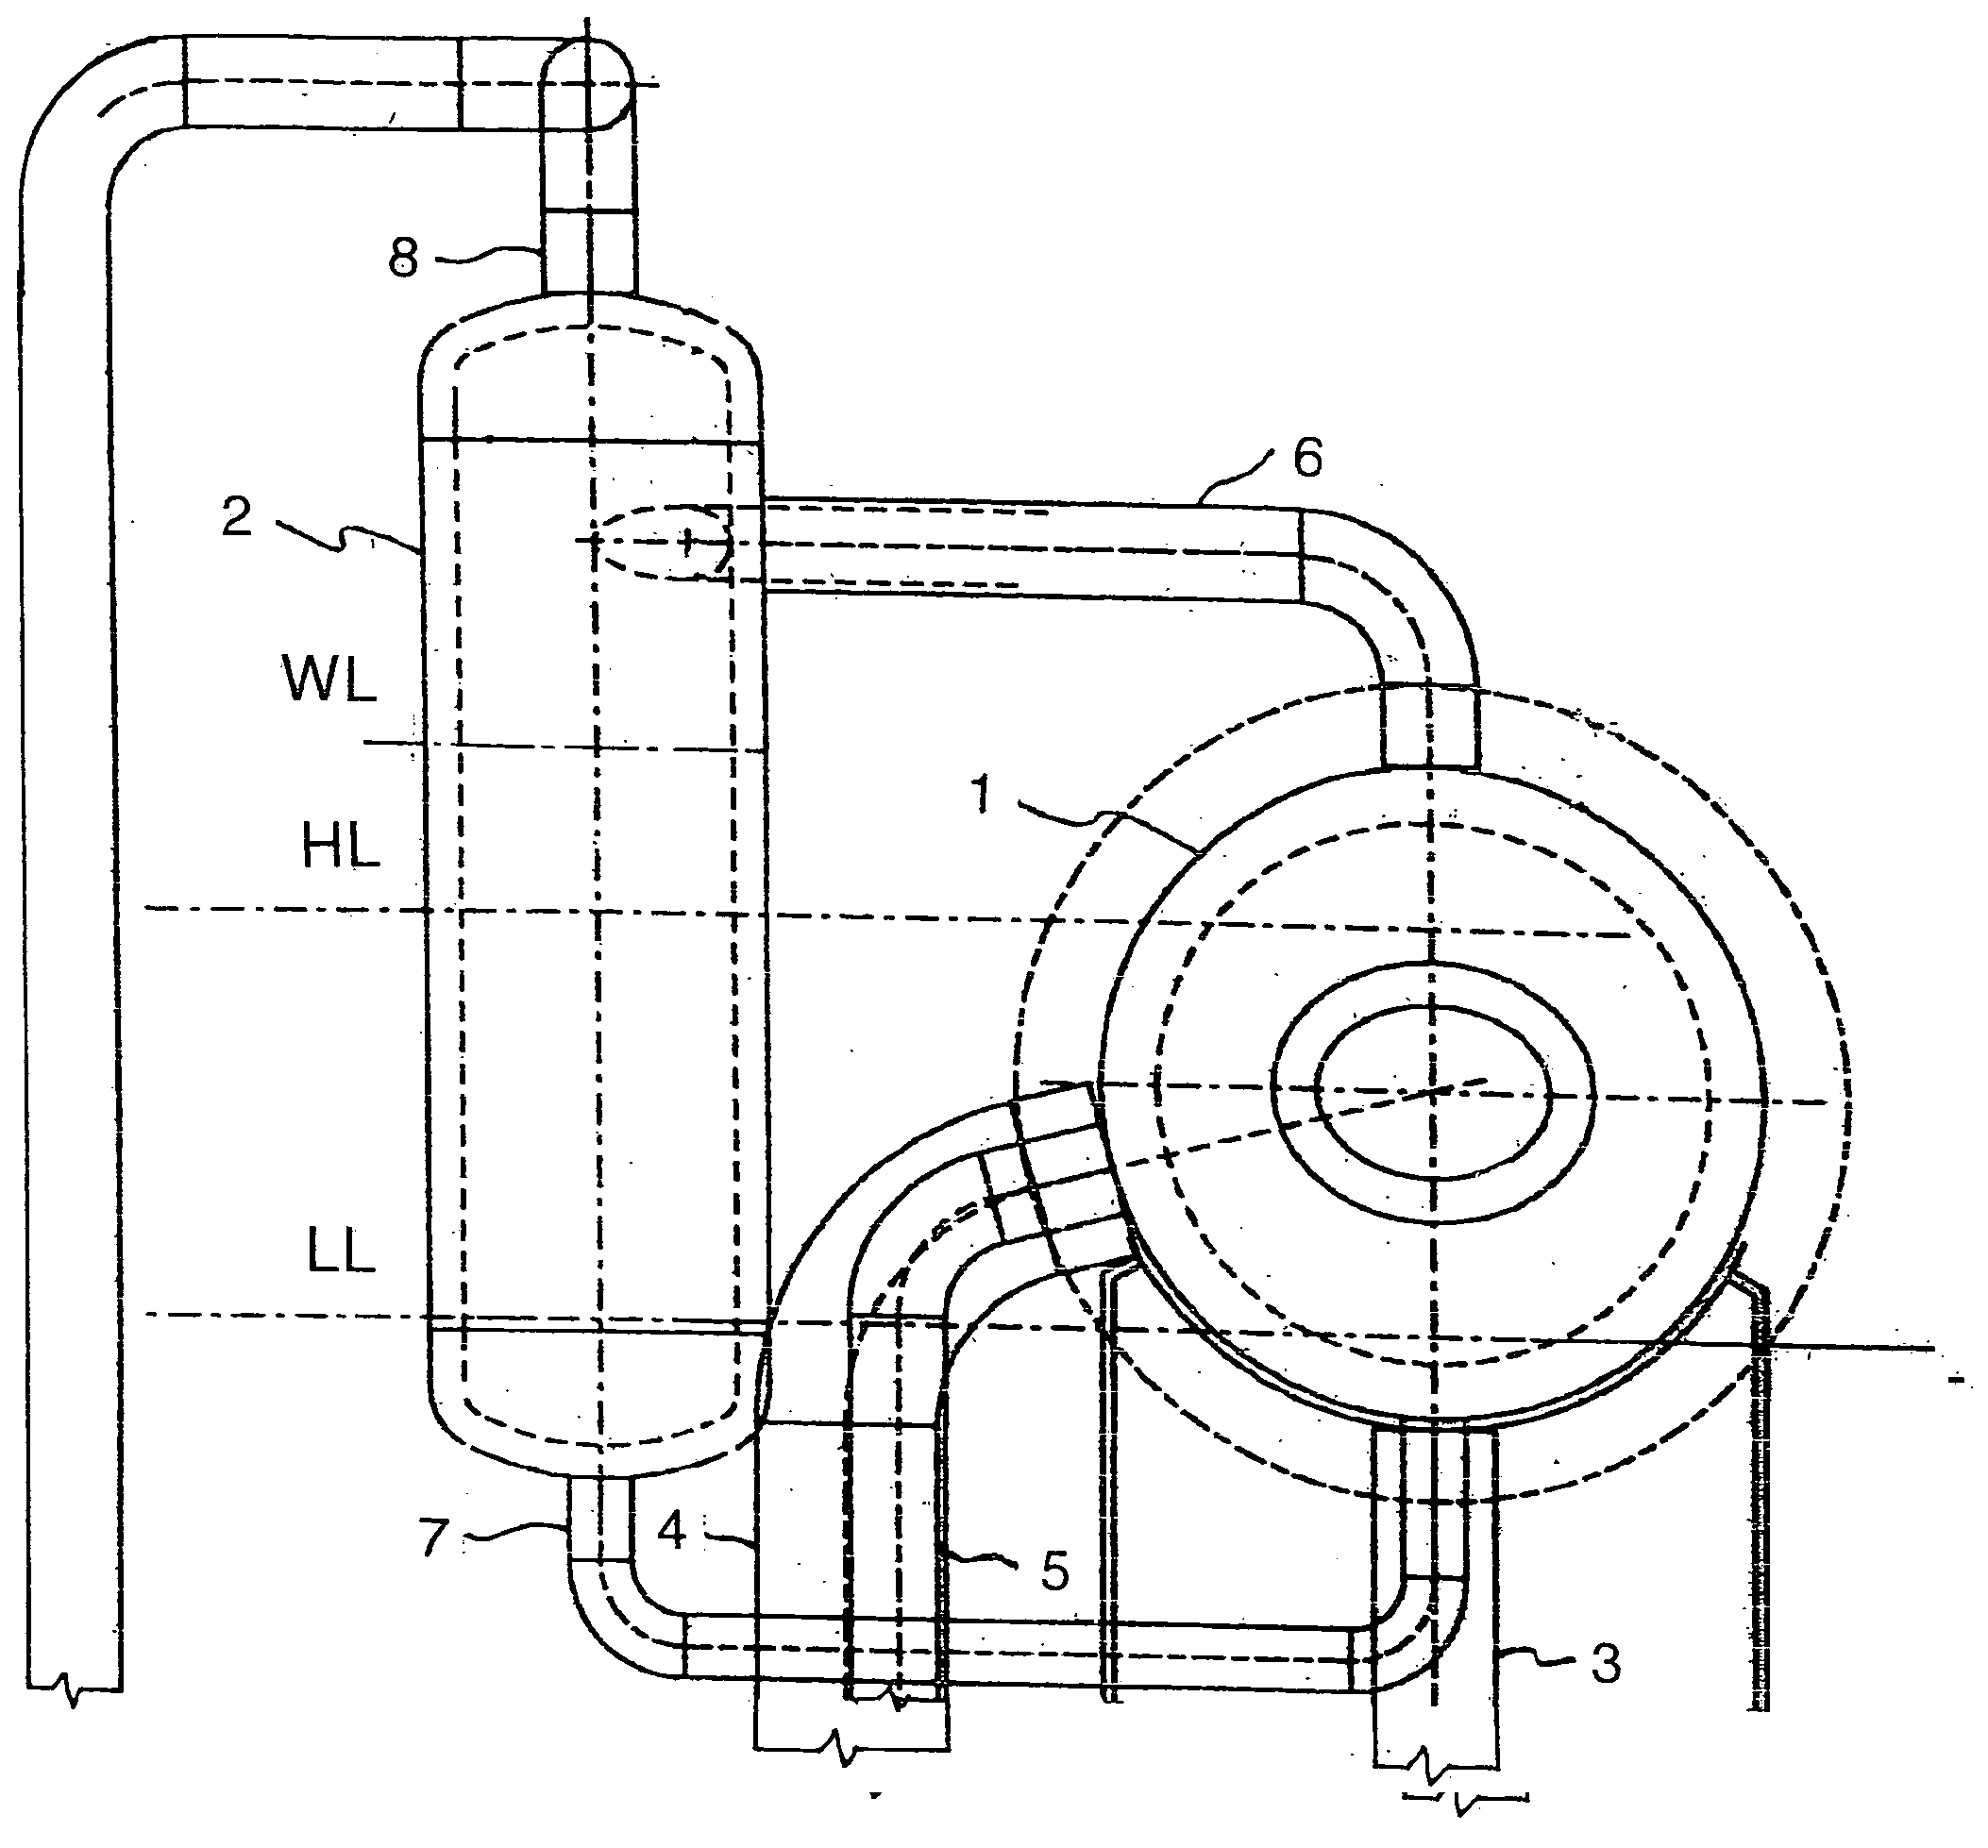 Evaporator system